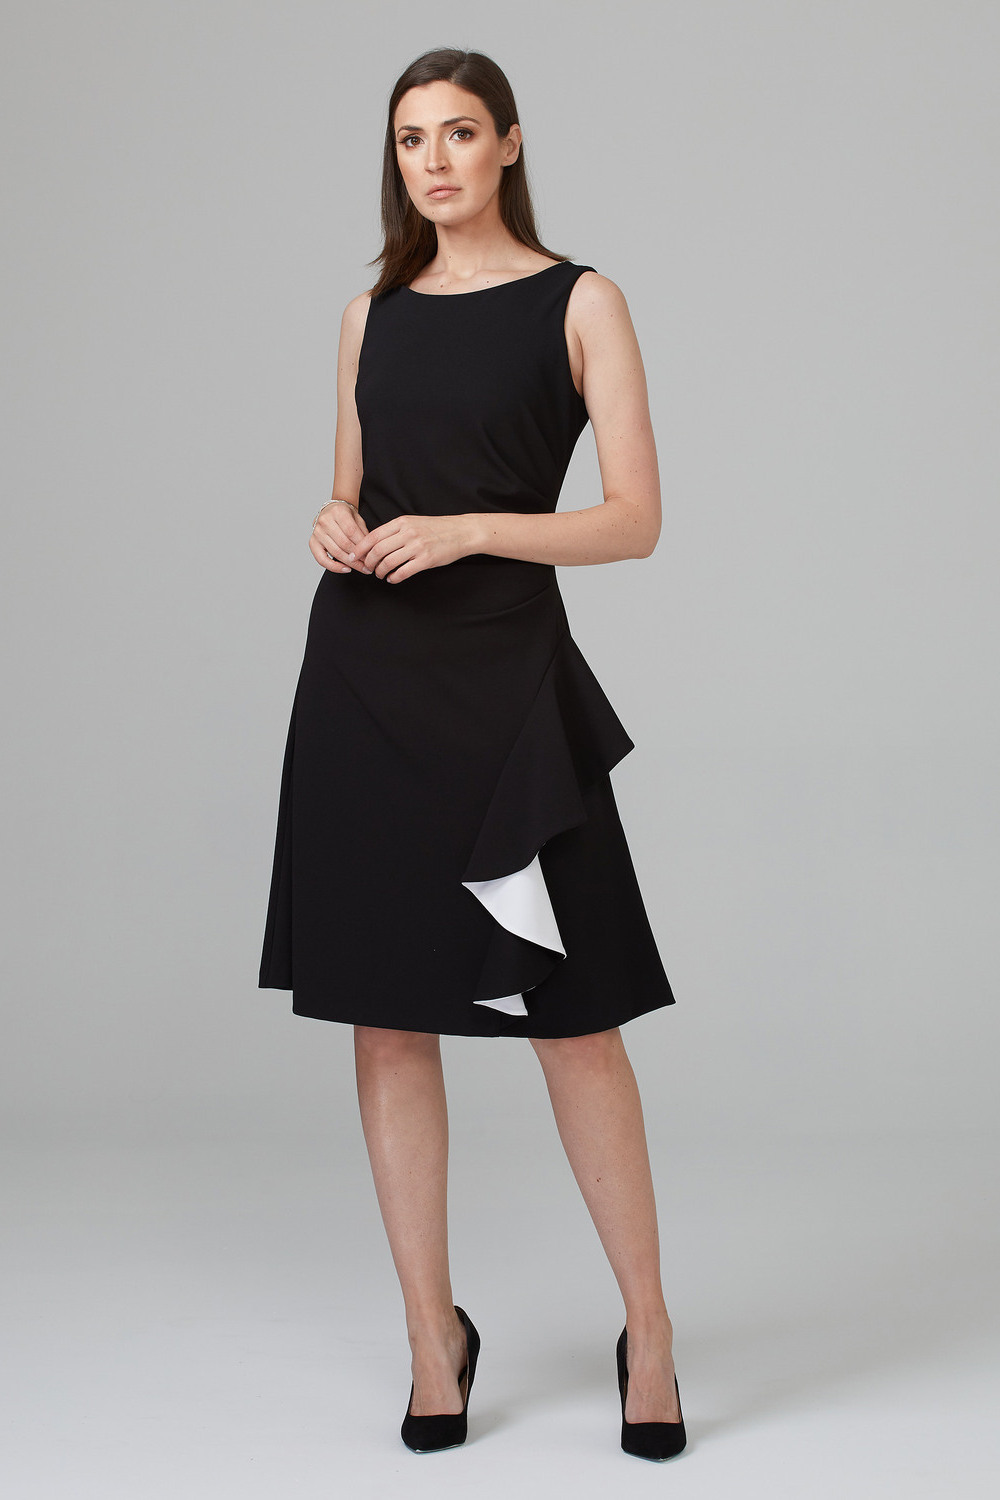 Joseph Ribkoff Dress Style 201319. Black/vanilla